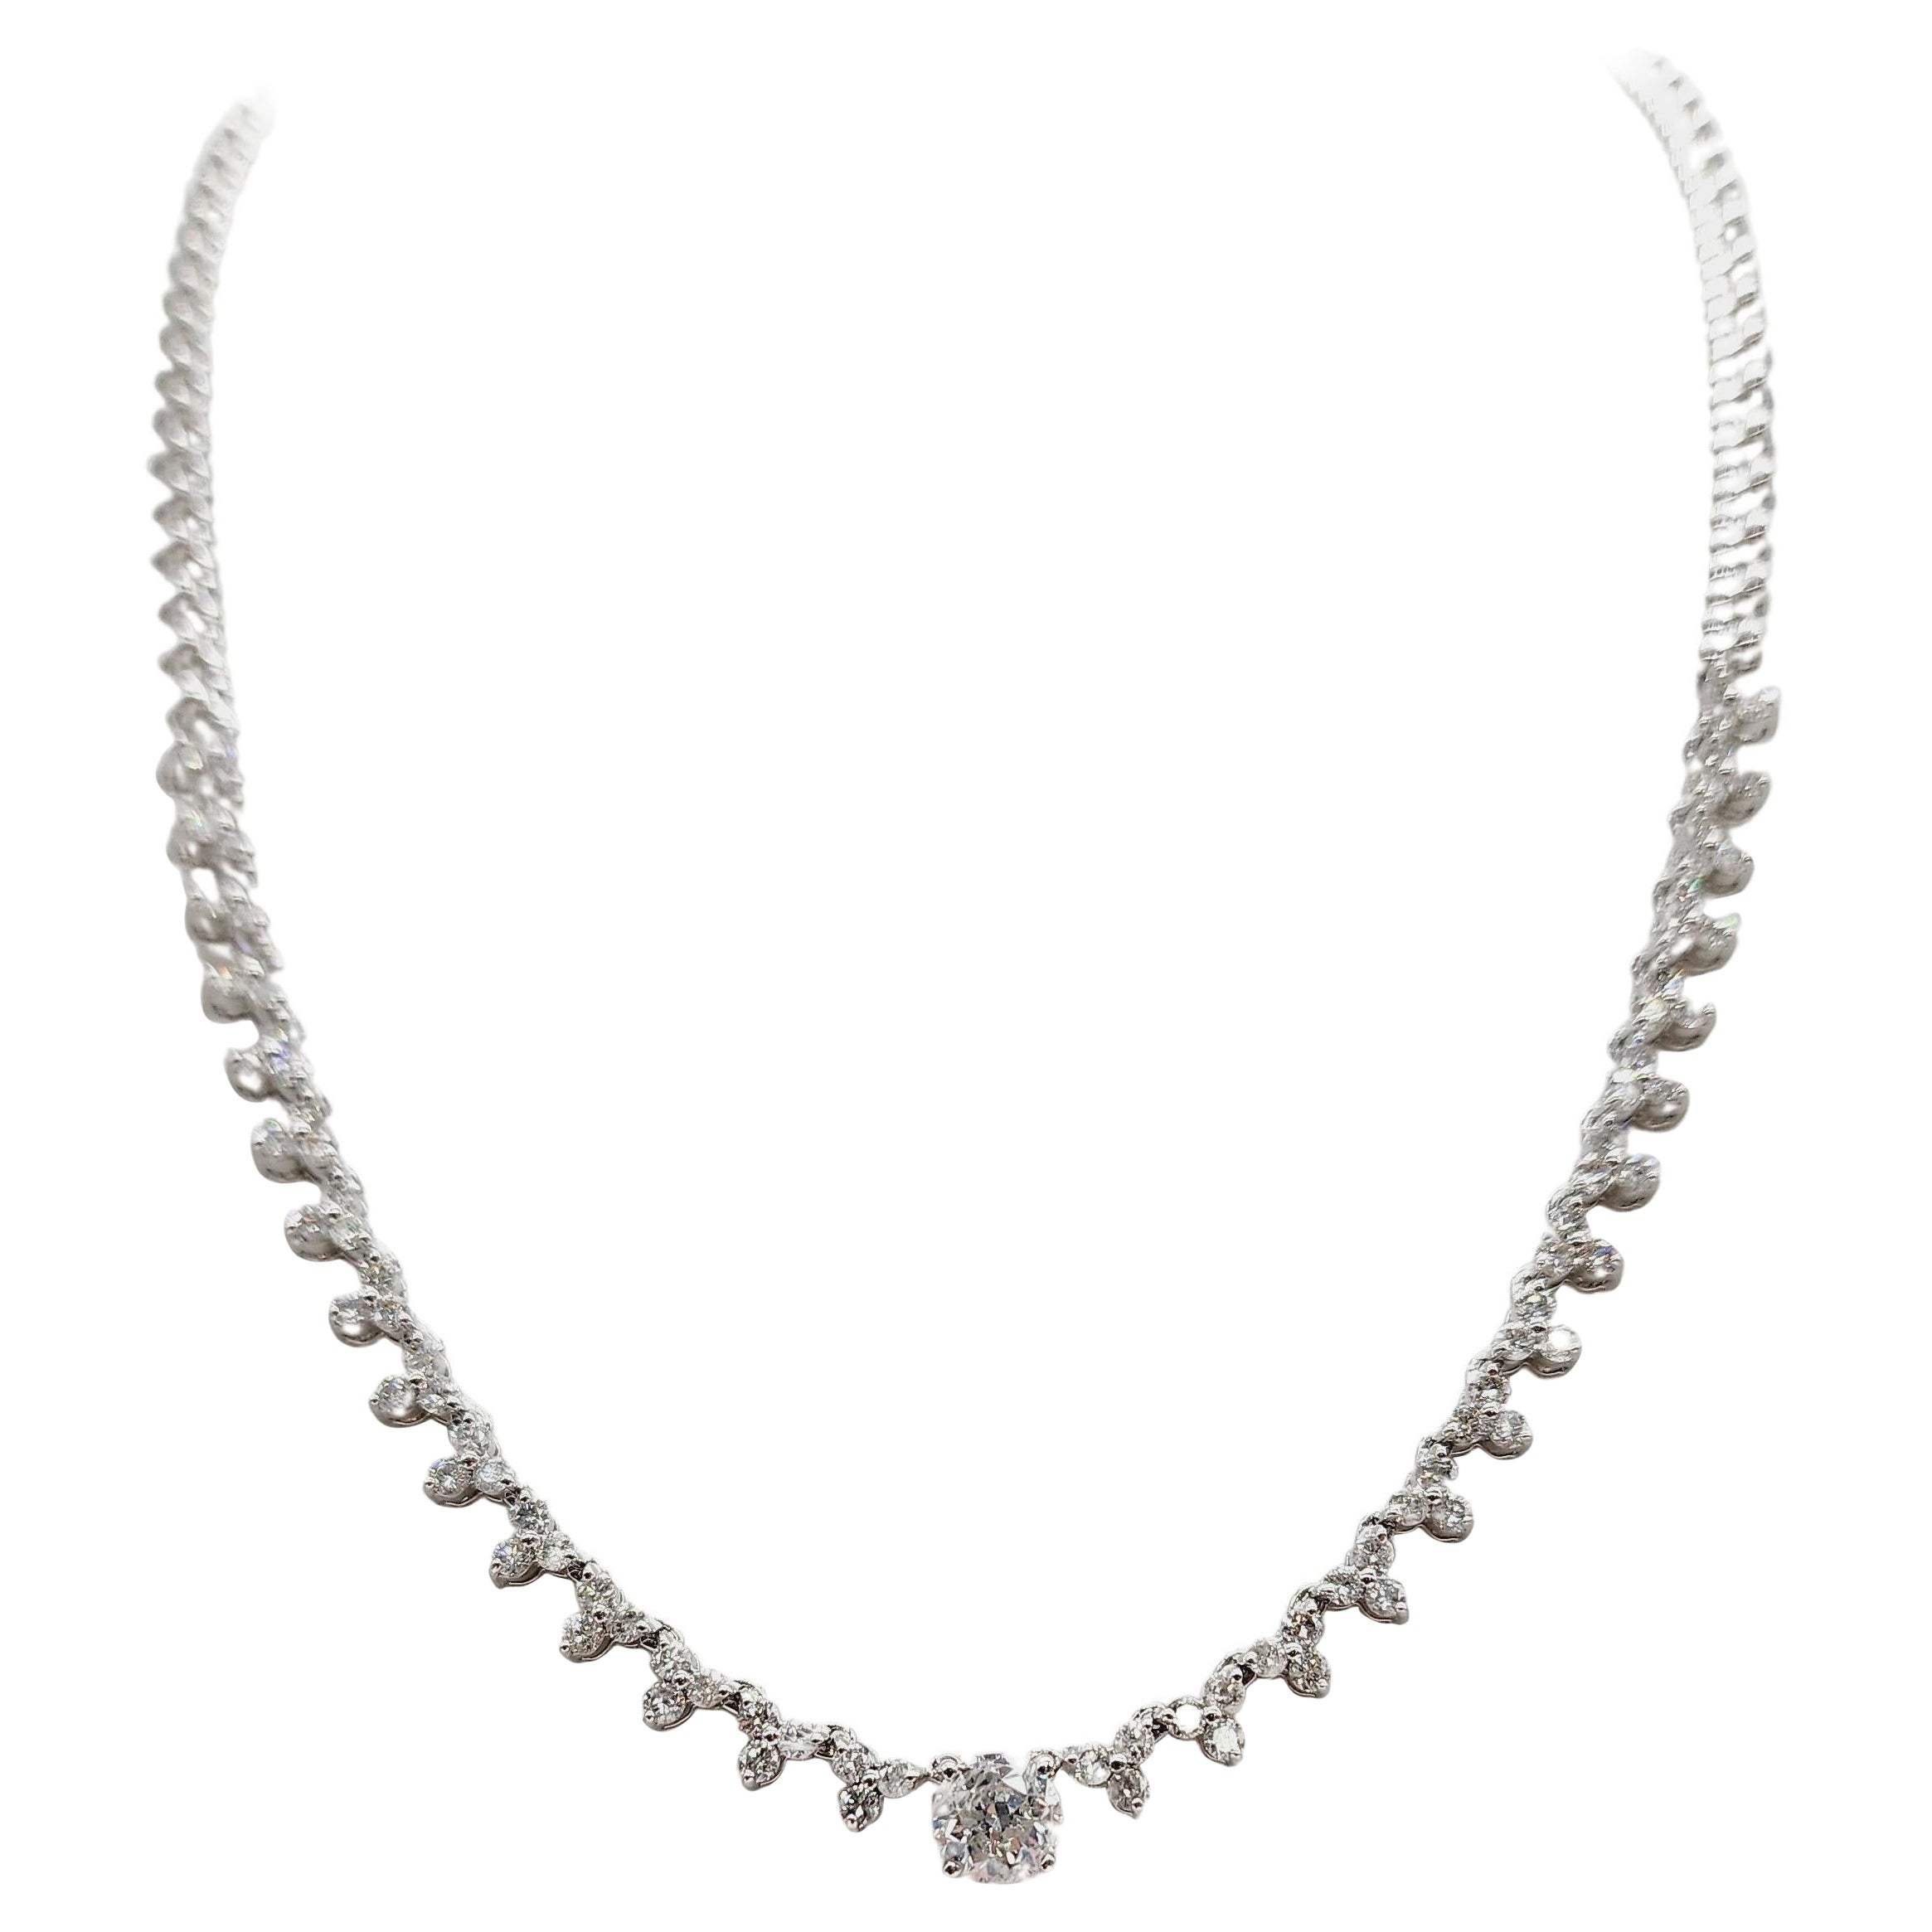 3.81 Carats Diamond Flower Shape White Gold Necklace 14 Karat 16'' (collier en or blanc)